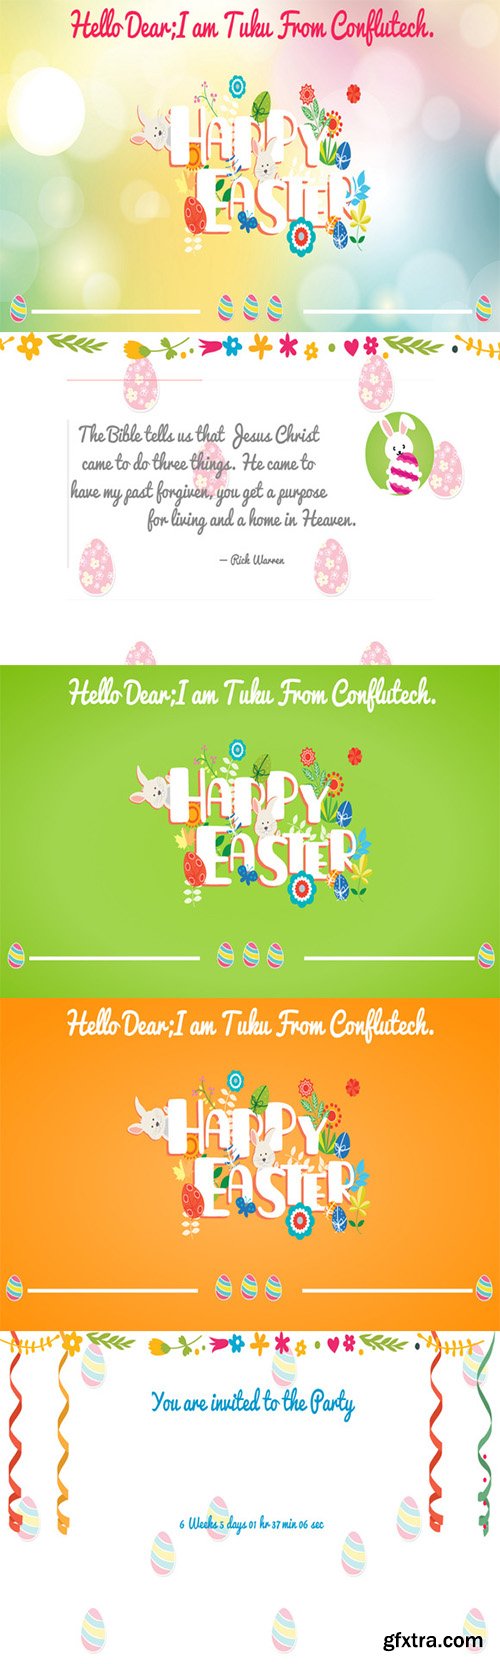 CM - Happy Easter- Web Design Template 219362